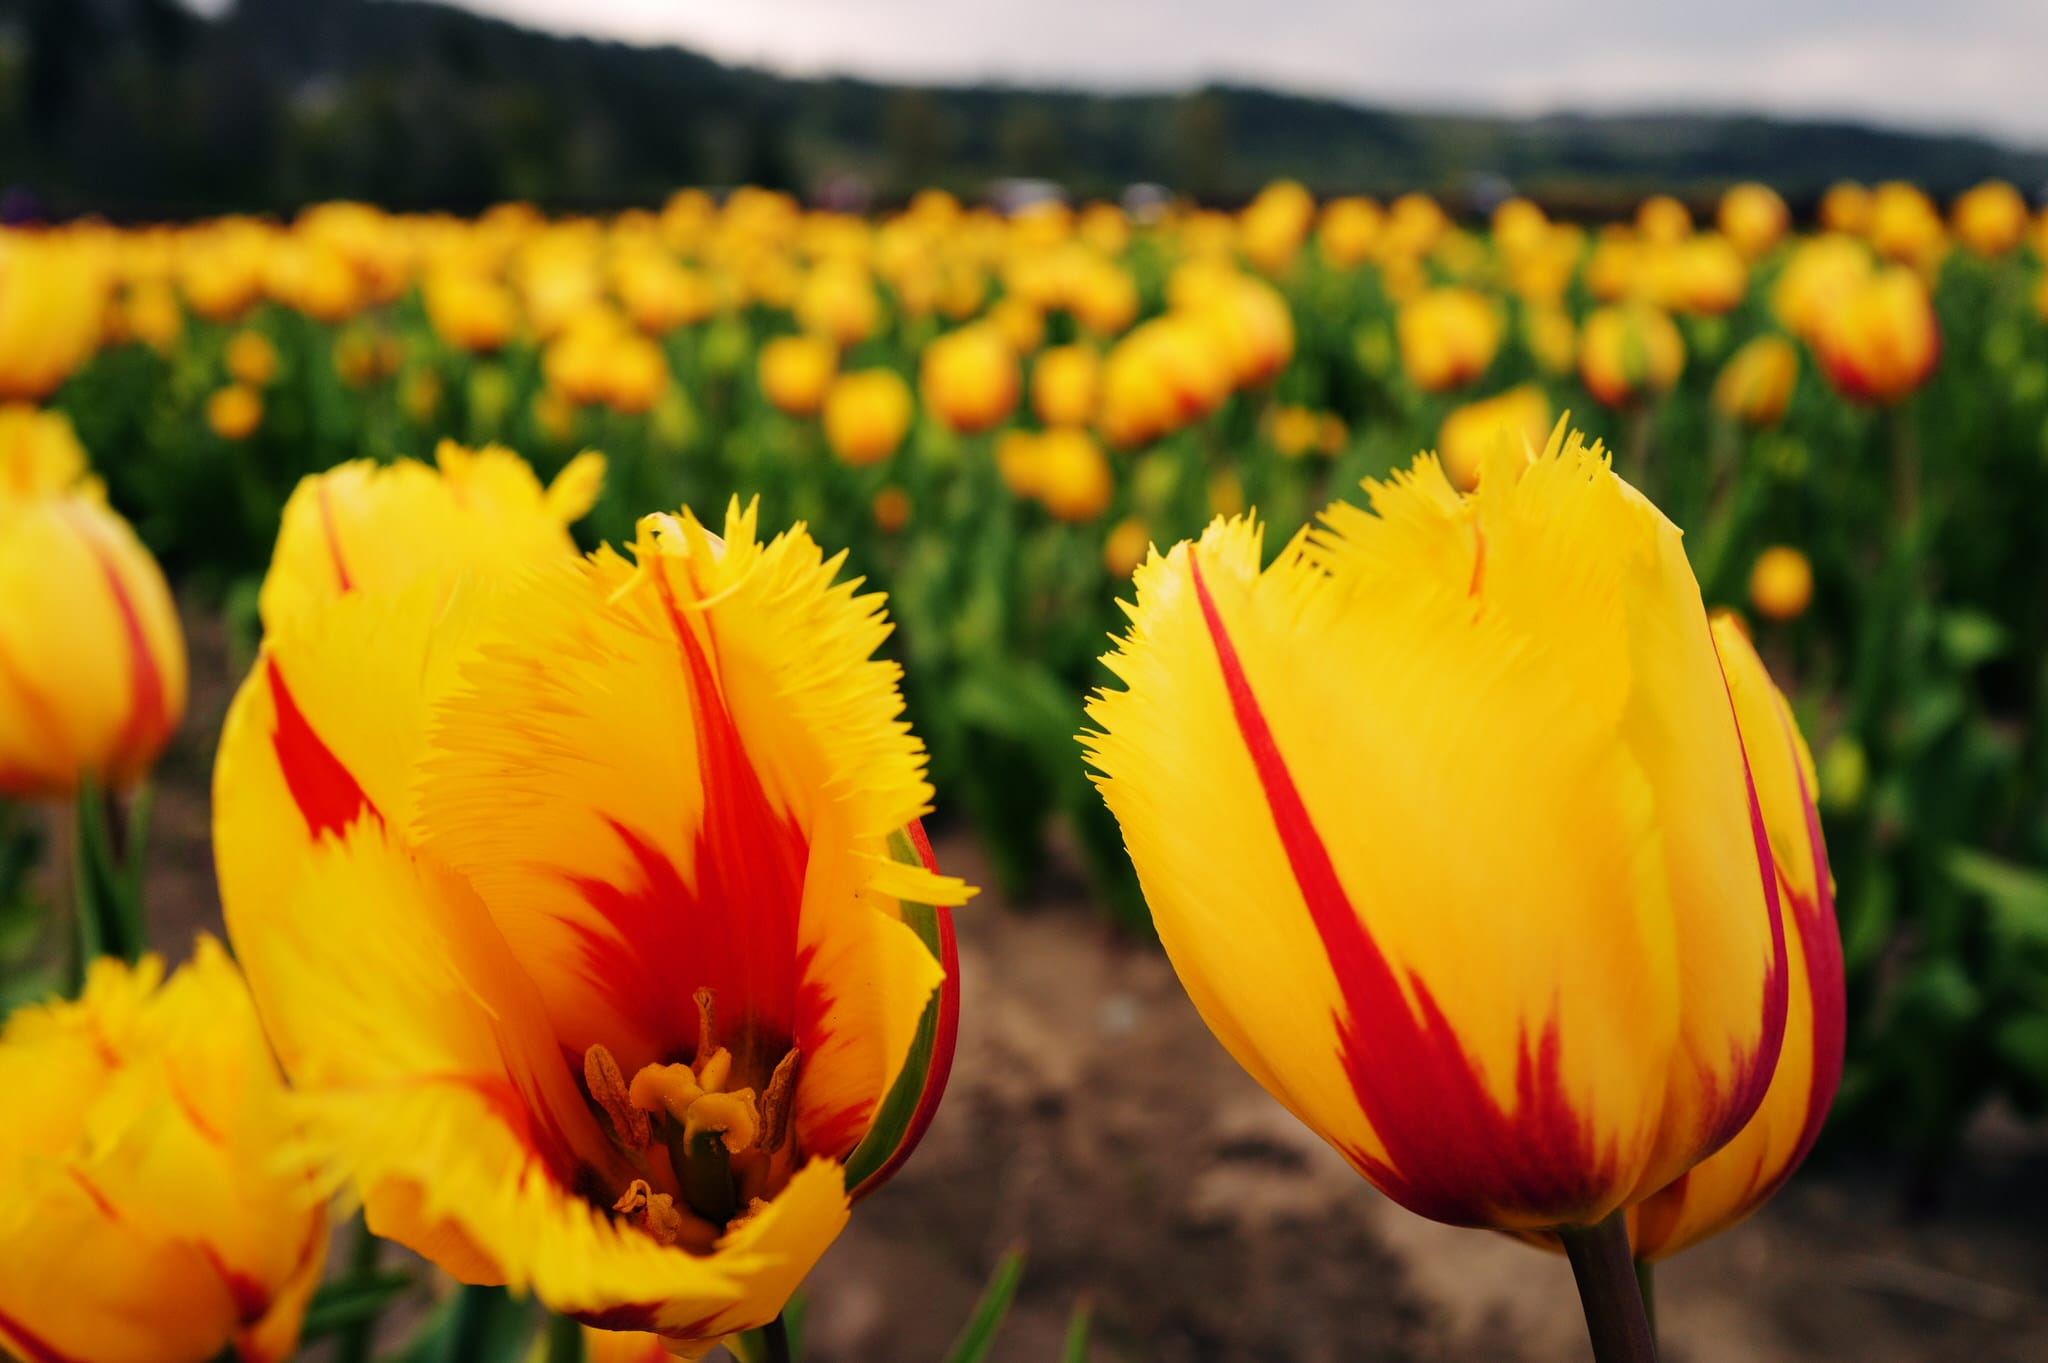 Leica Eternal Look JPEG - Tulips at Knutson Farms in Sumner, WA